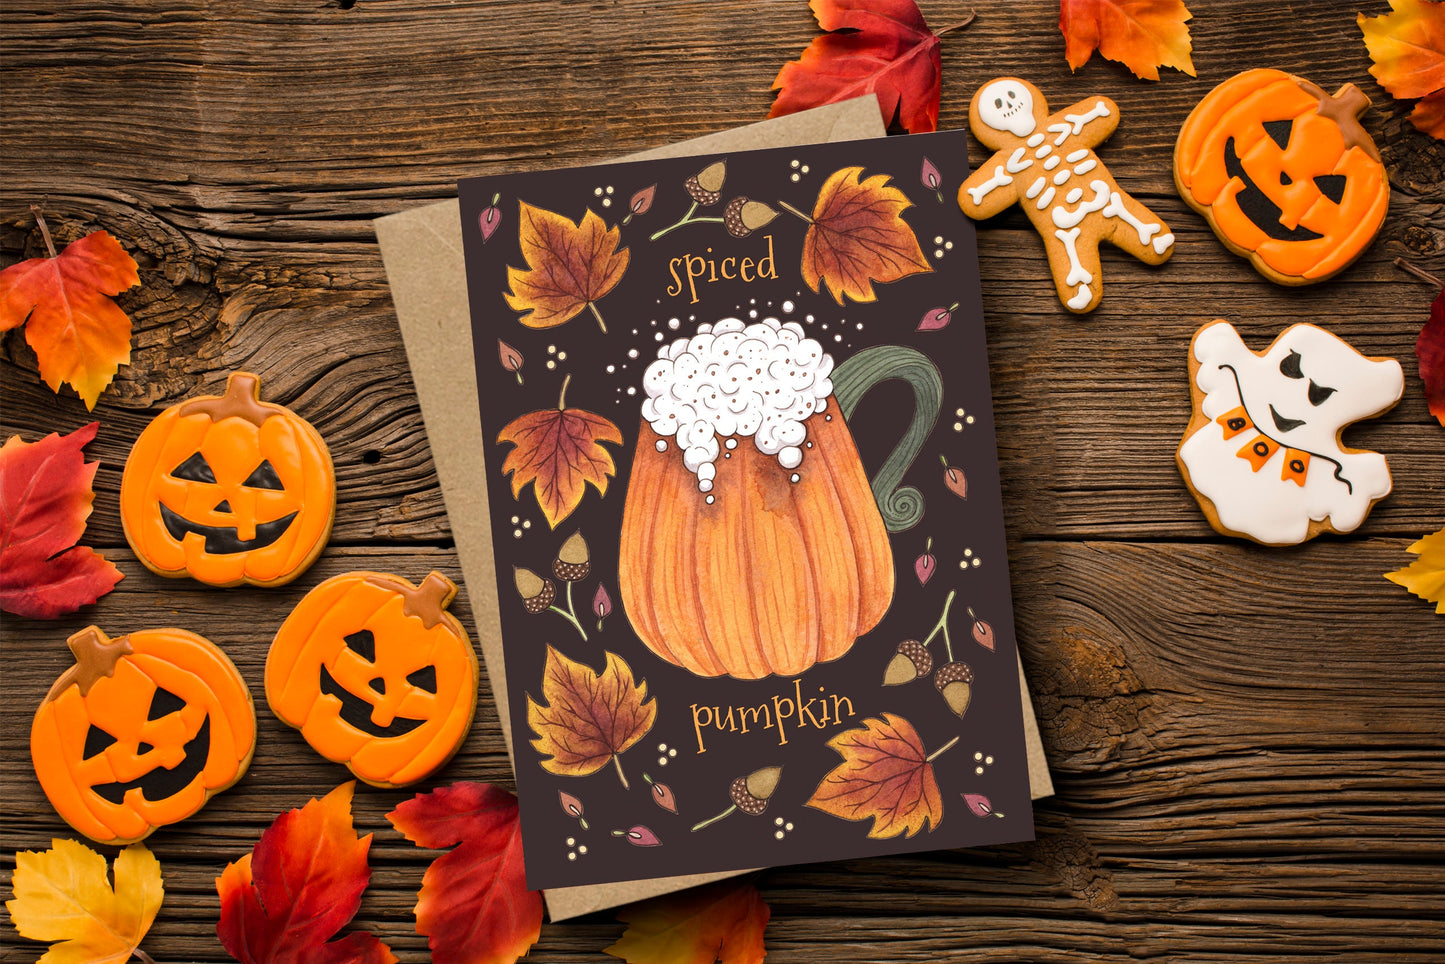 Spiced Pumpkin Greetings Card & Envelope - Pumpkin Spice PSL Autumn Falling Leaves Card - Halloween Pumpkin Mug Thanksgiving Greetings Card